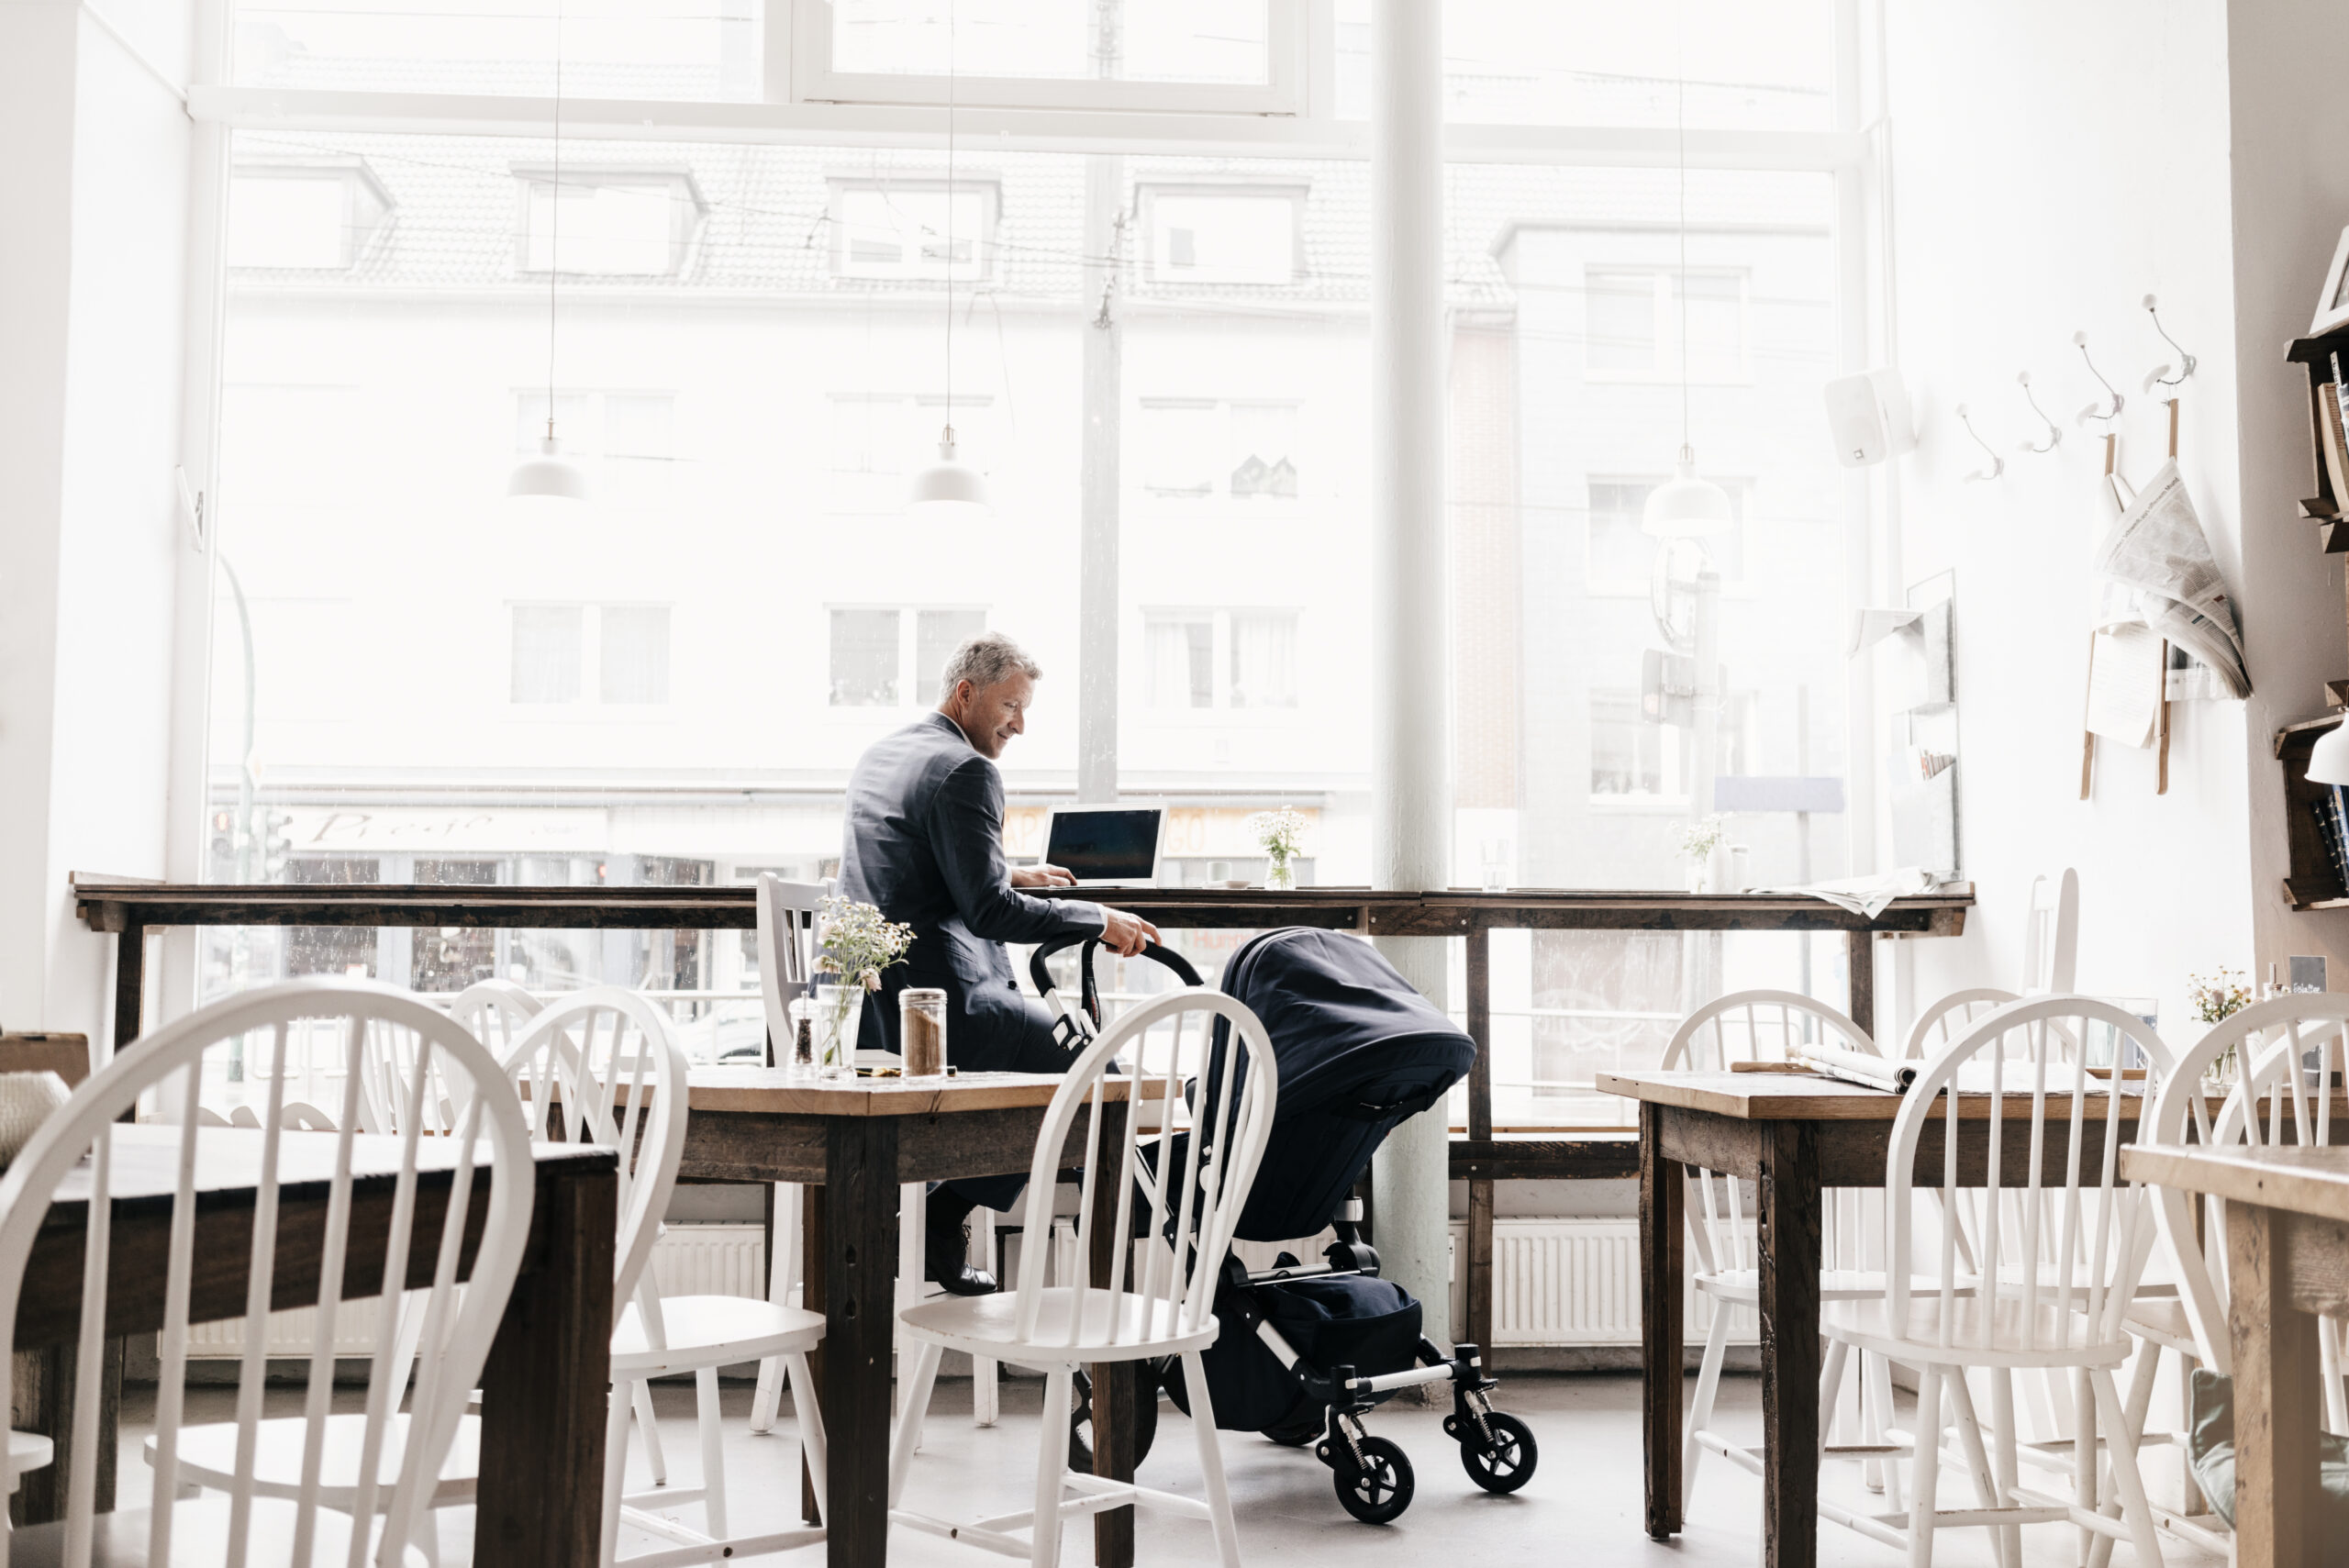 Businessman sitting in cafe with pram